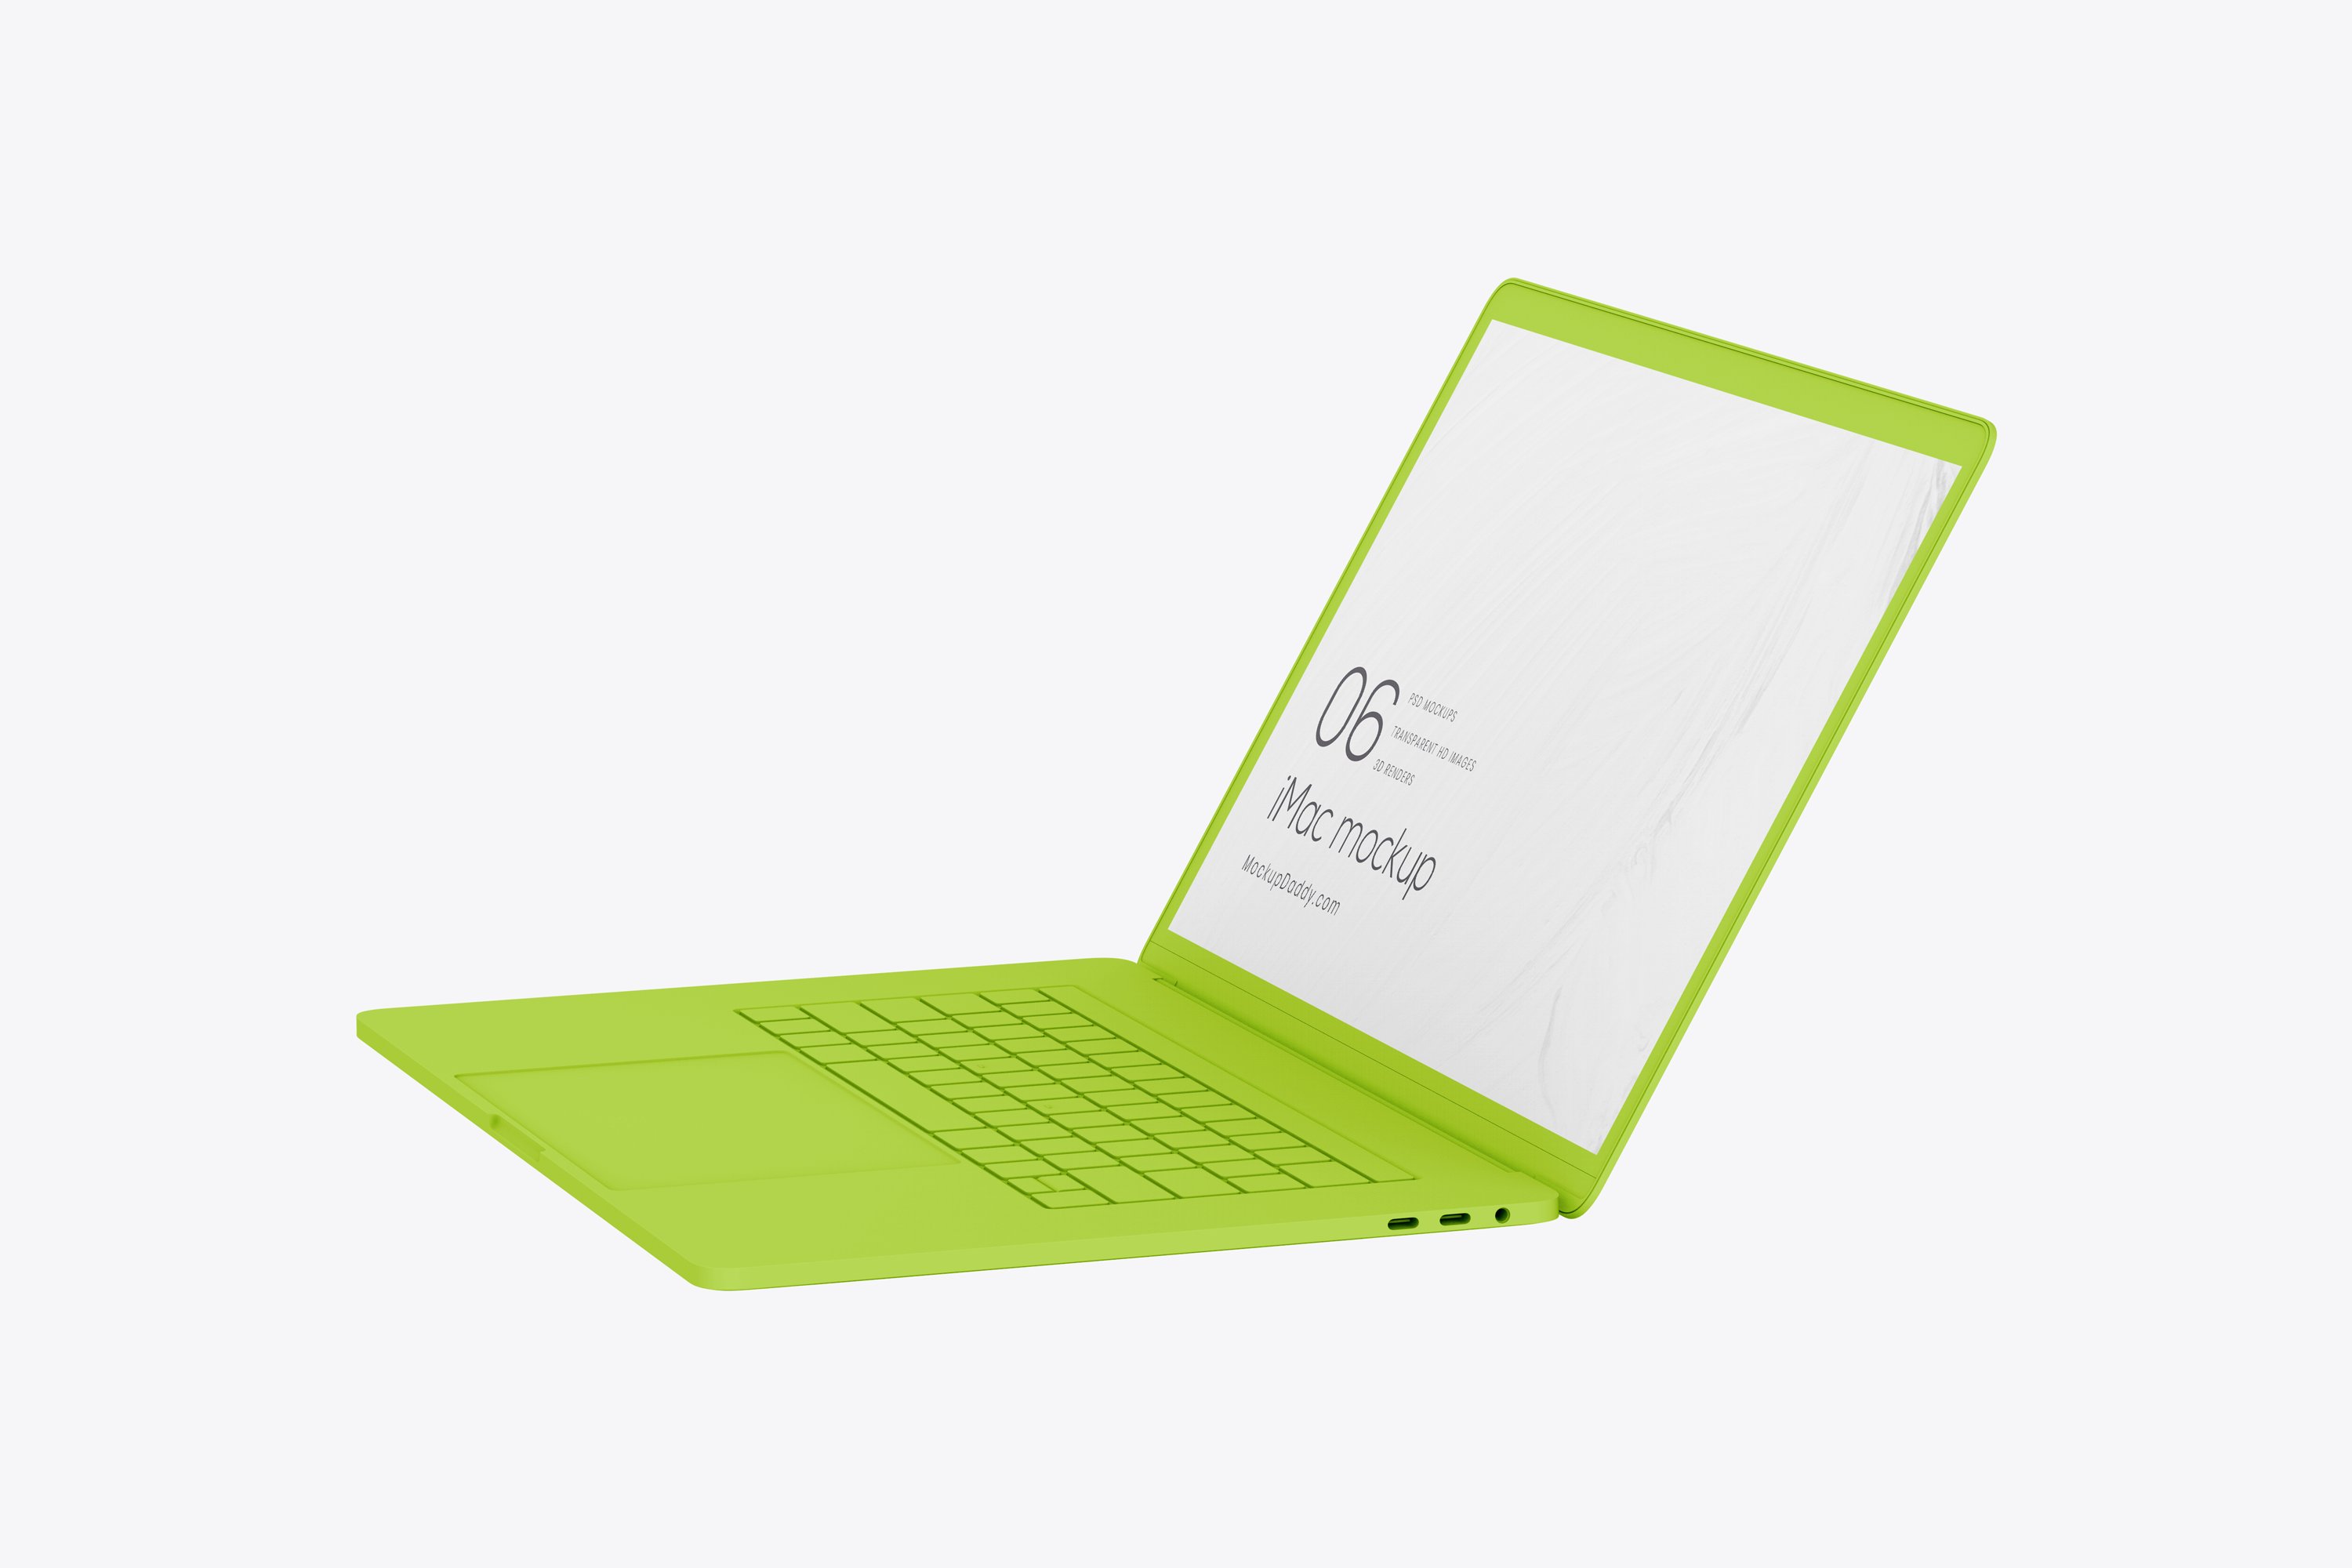 macbook pro 15 inch green mockup 11 181